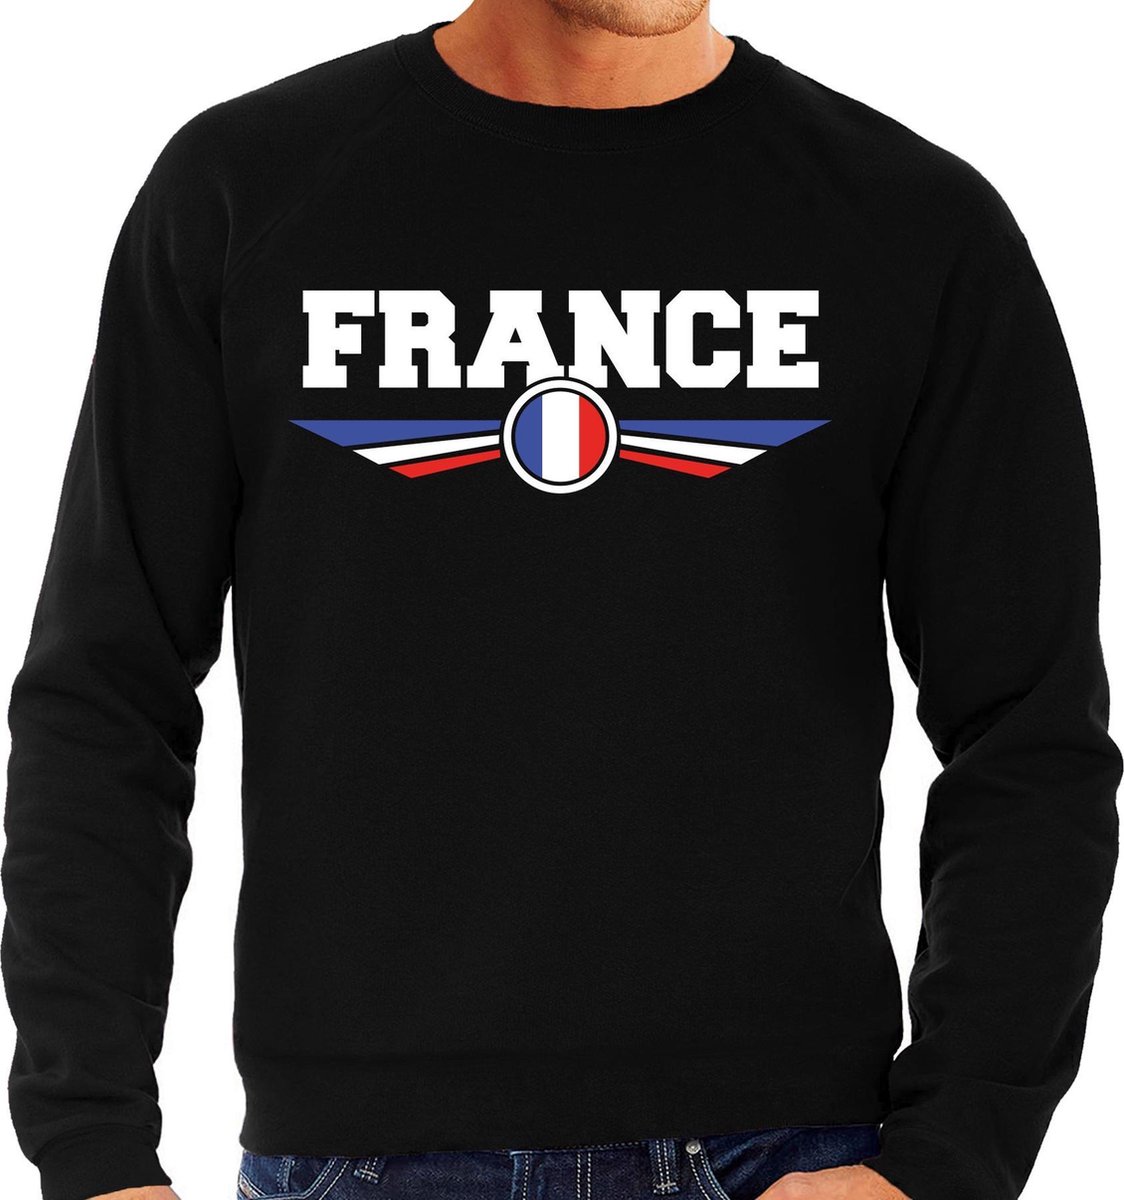 Frankrijk / France landen sweater / trui zwart heren L